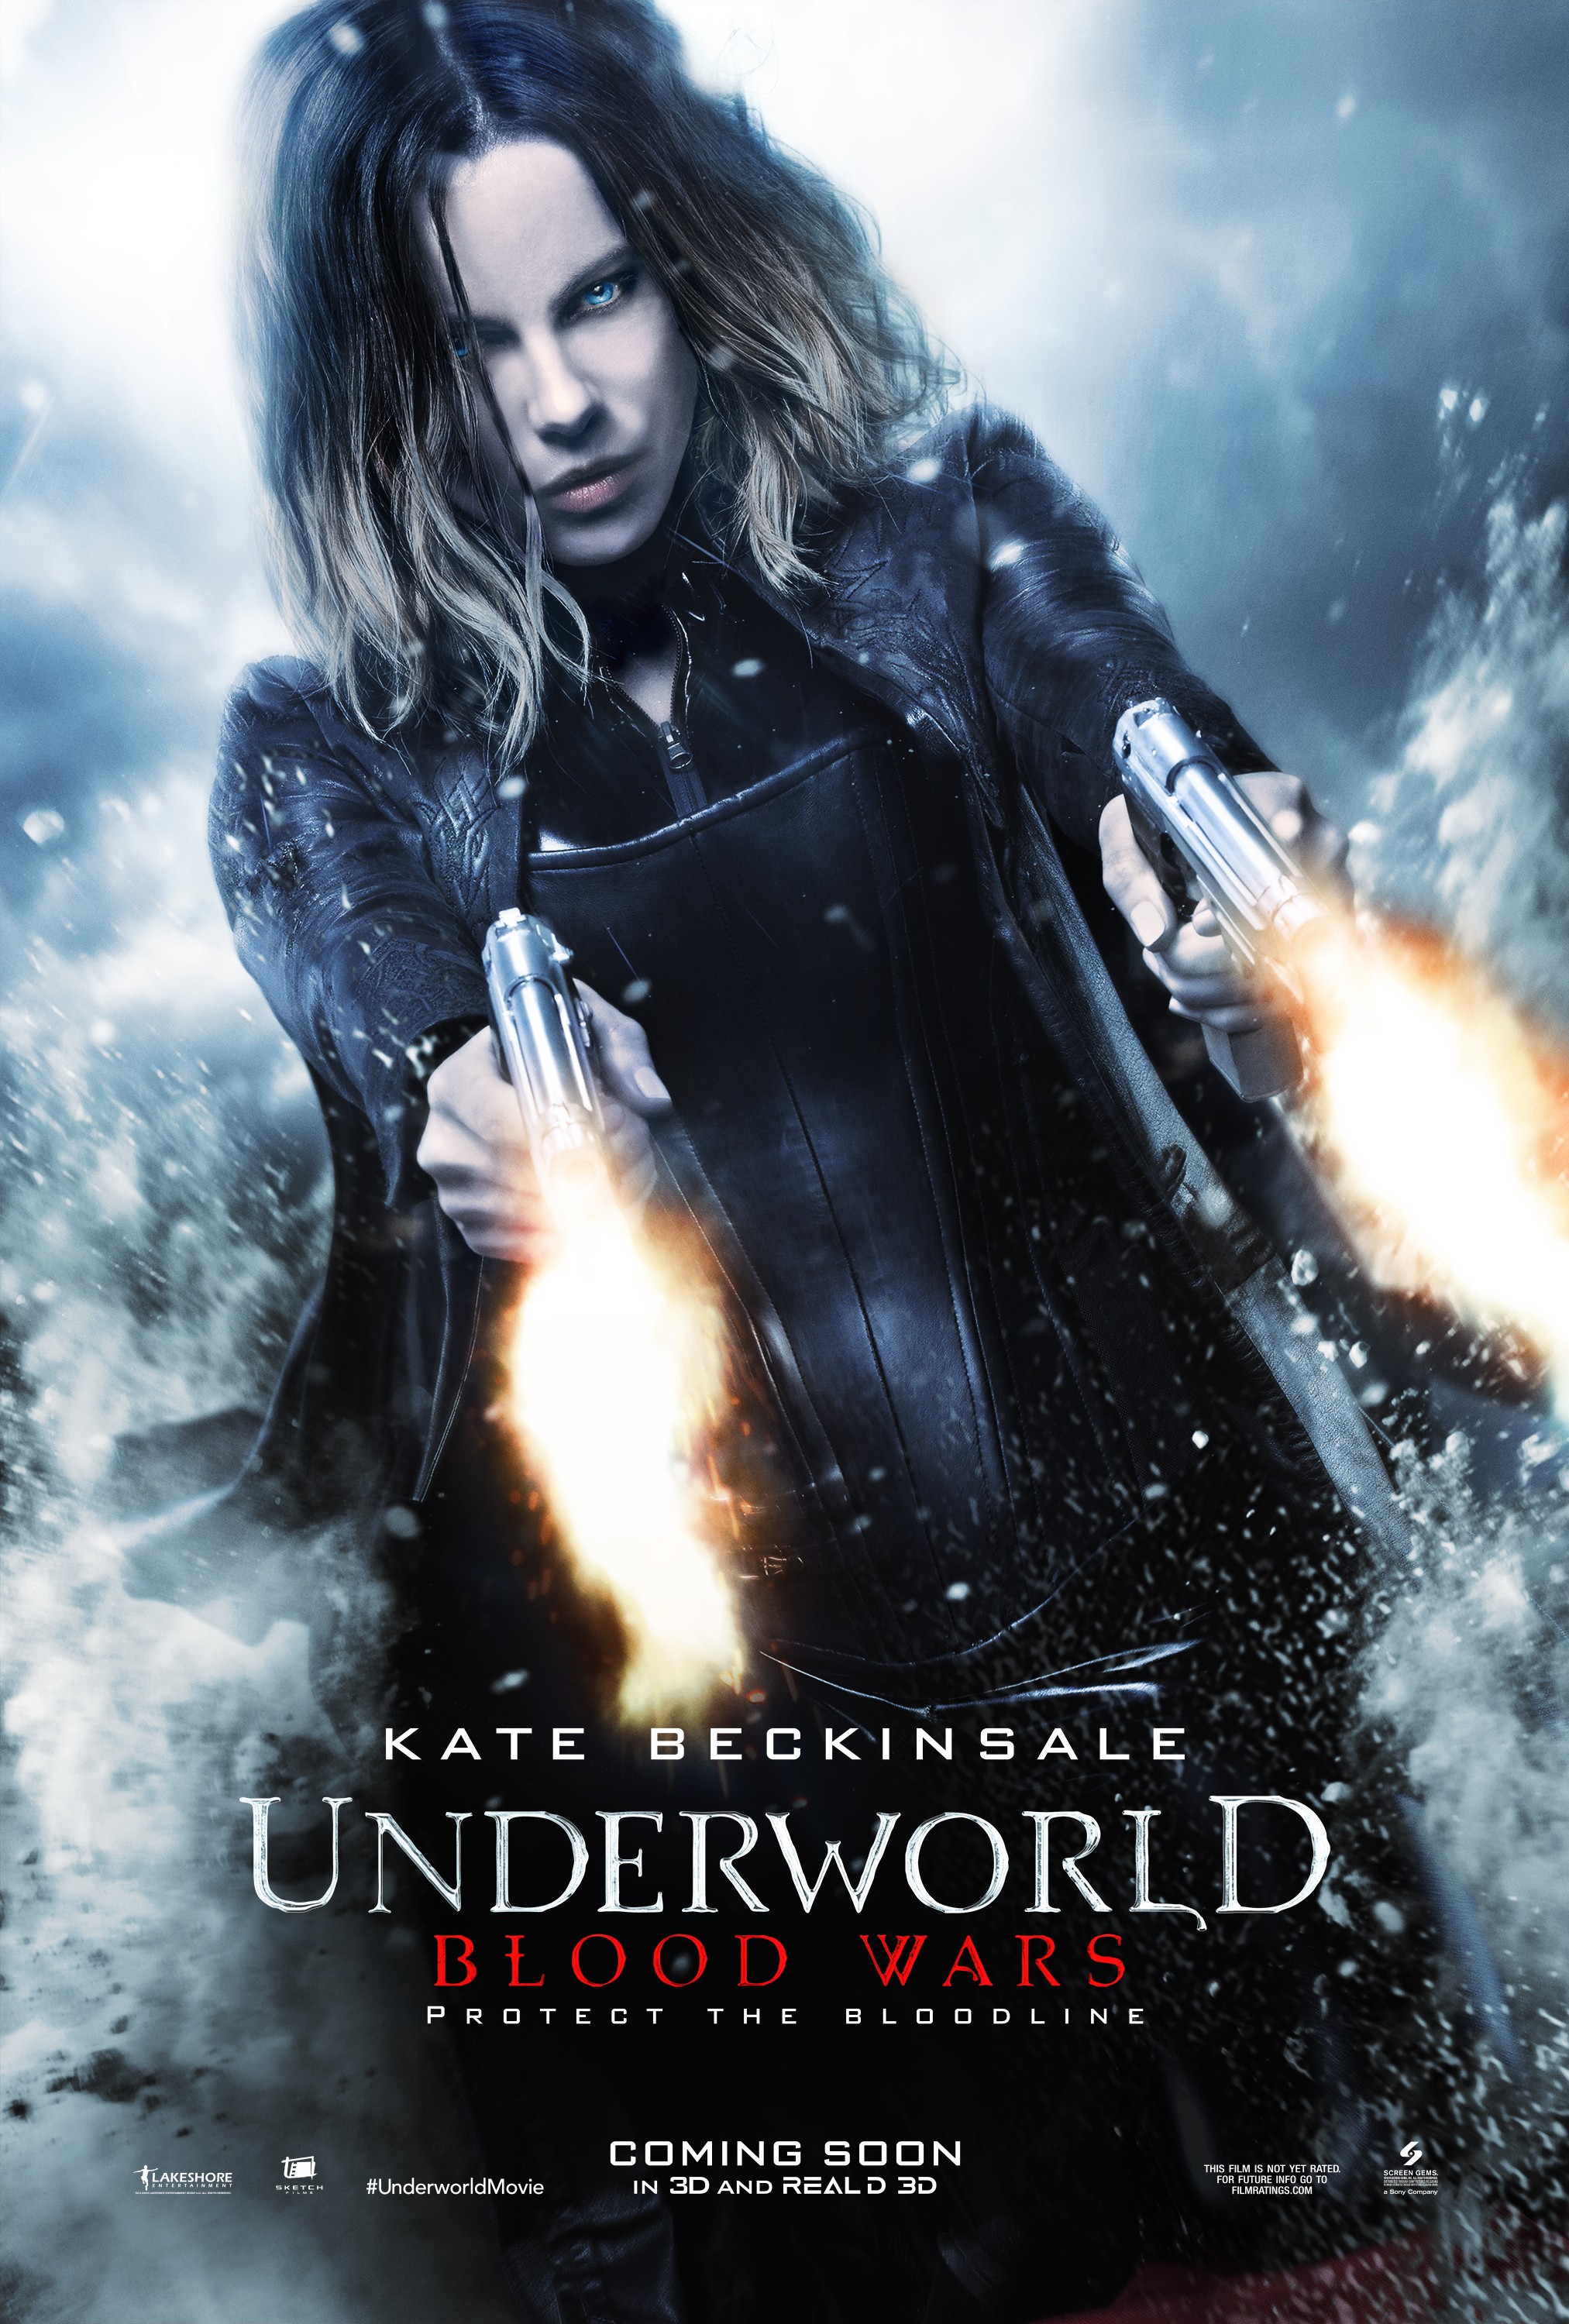 chris bowden recommends Underworld 5 Free Movie